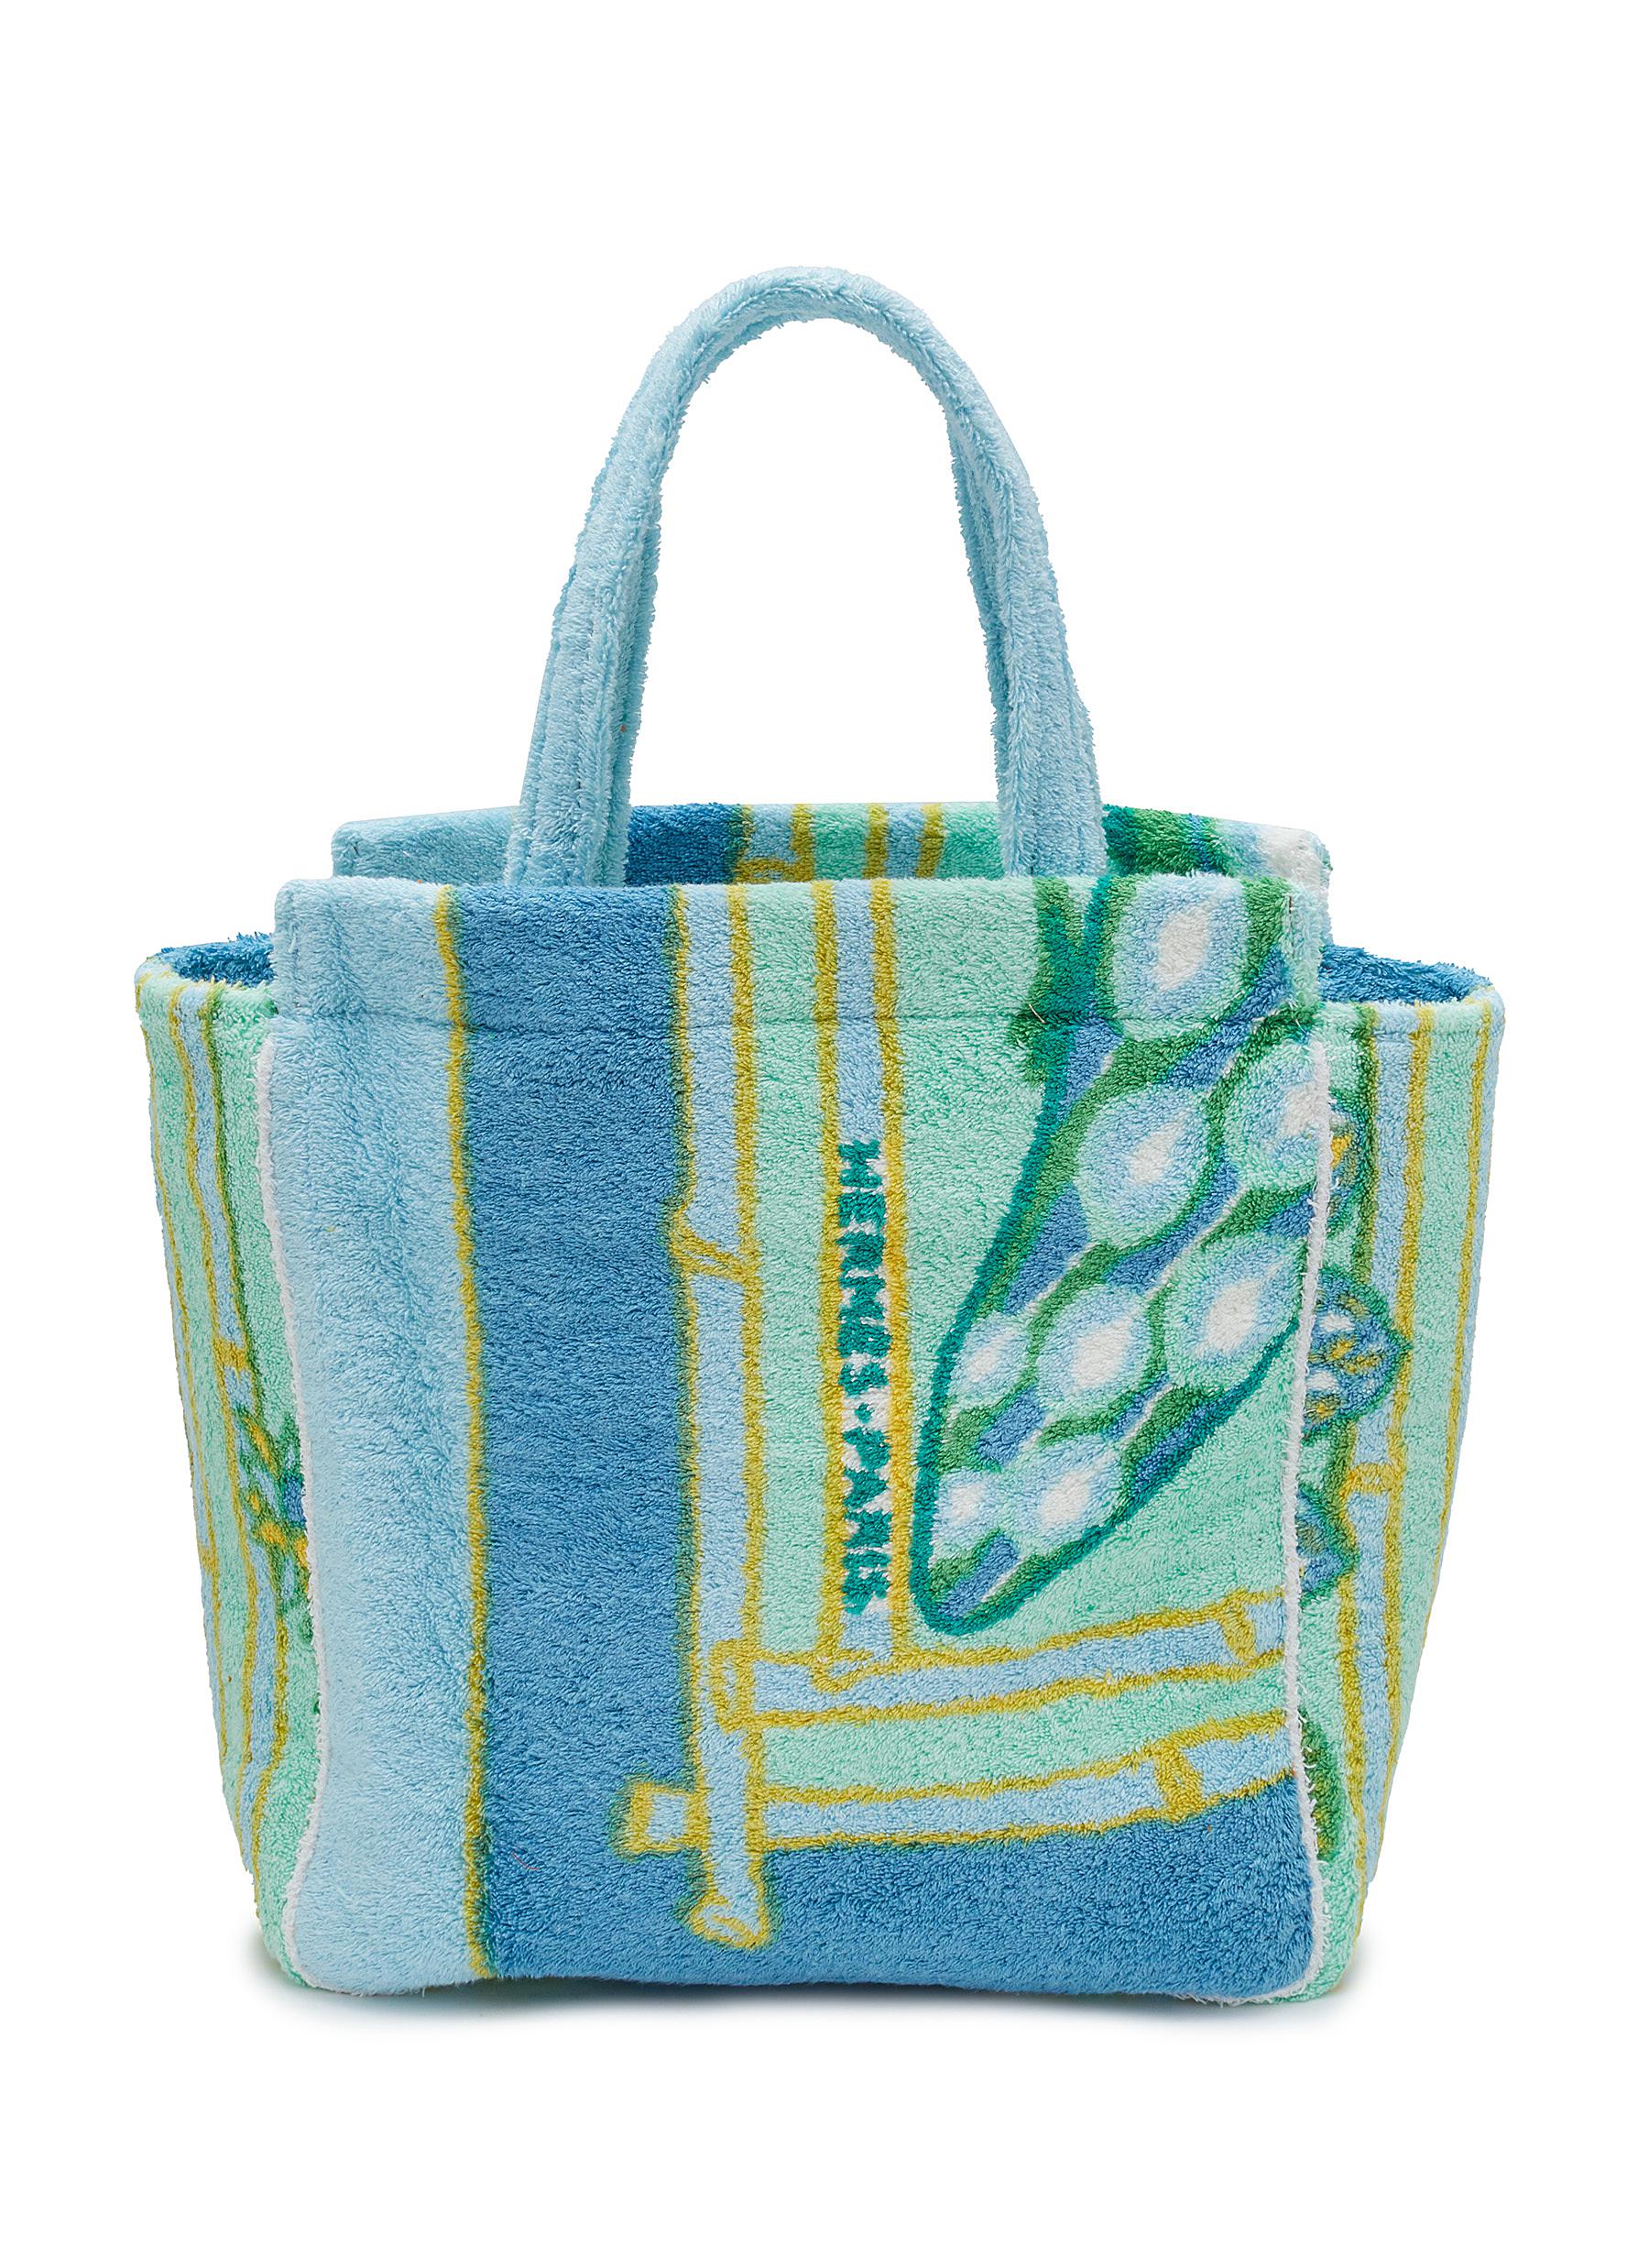 ‘The Cabana' Beach Towel Tote Bag